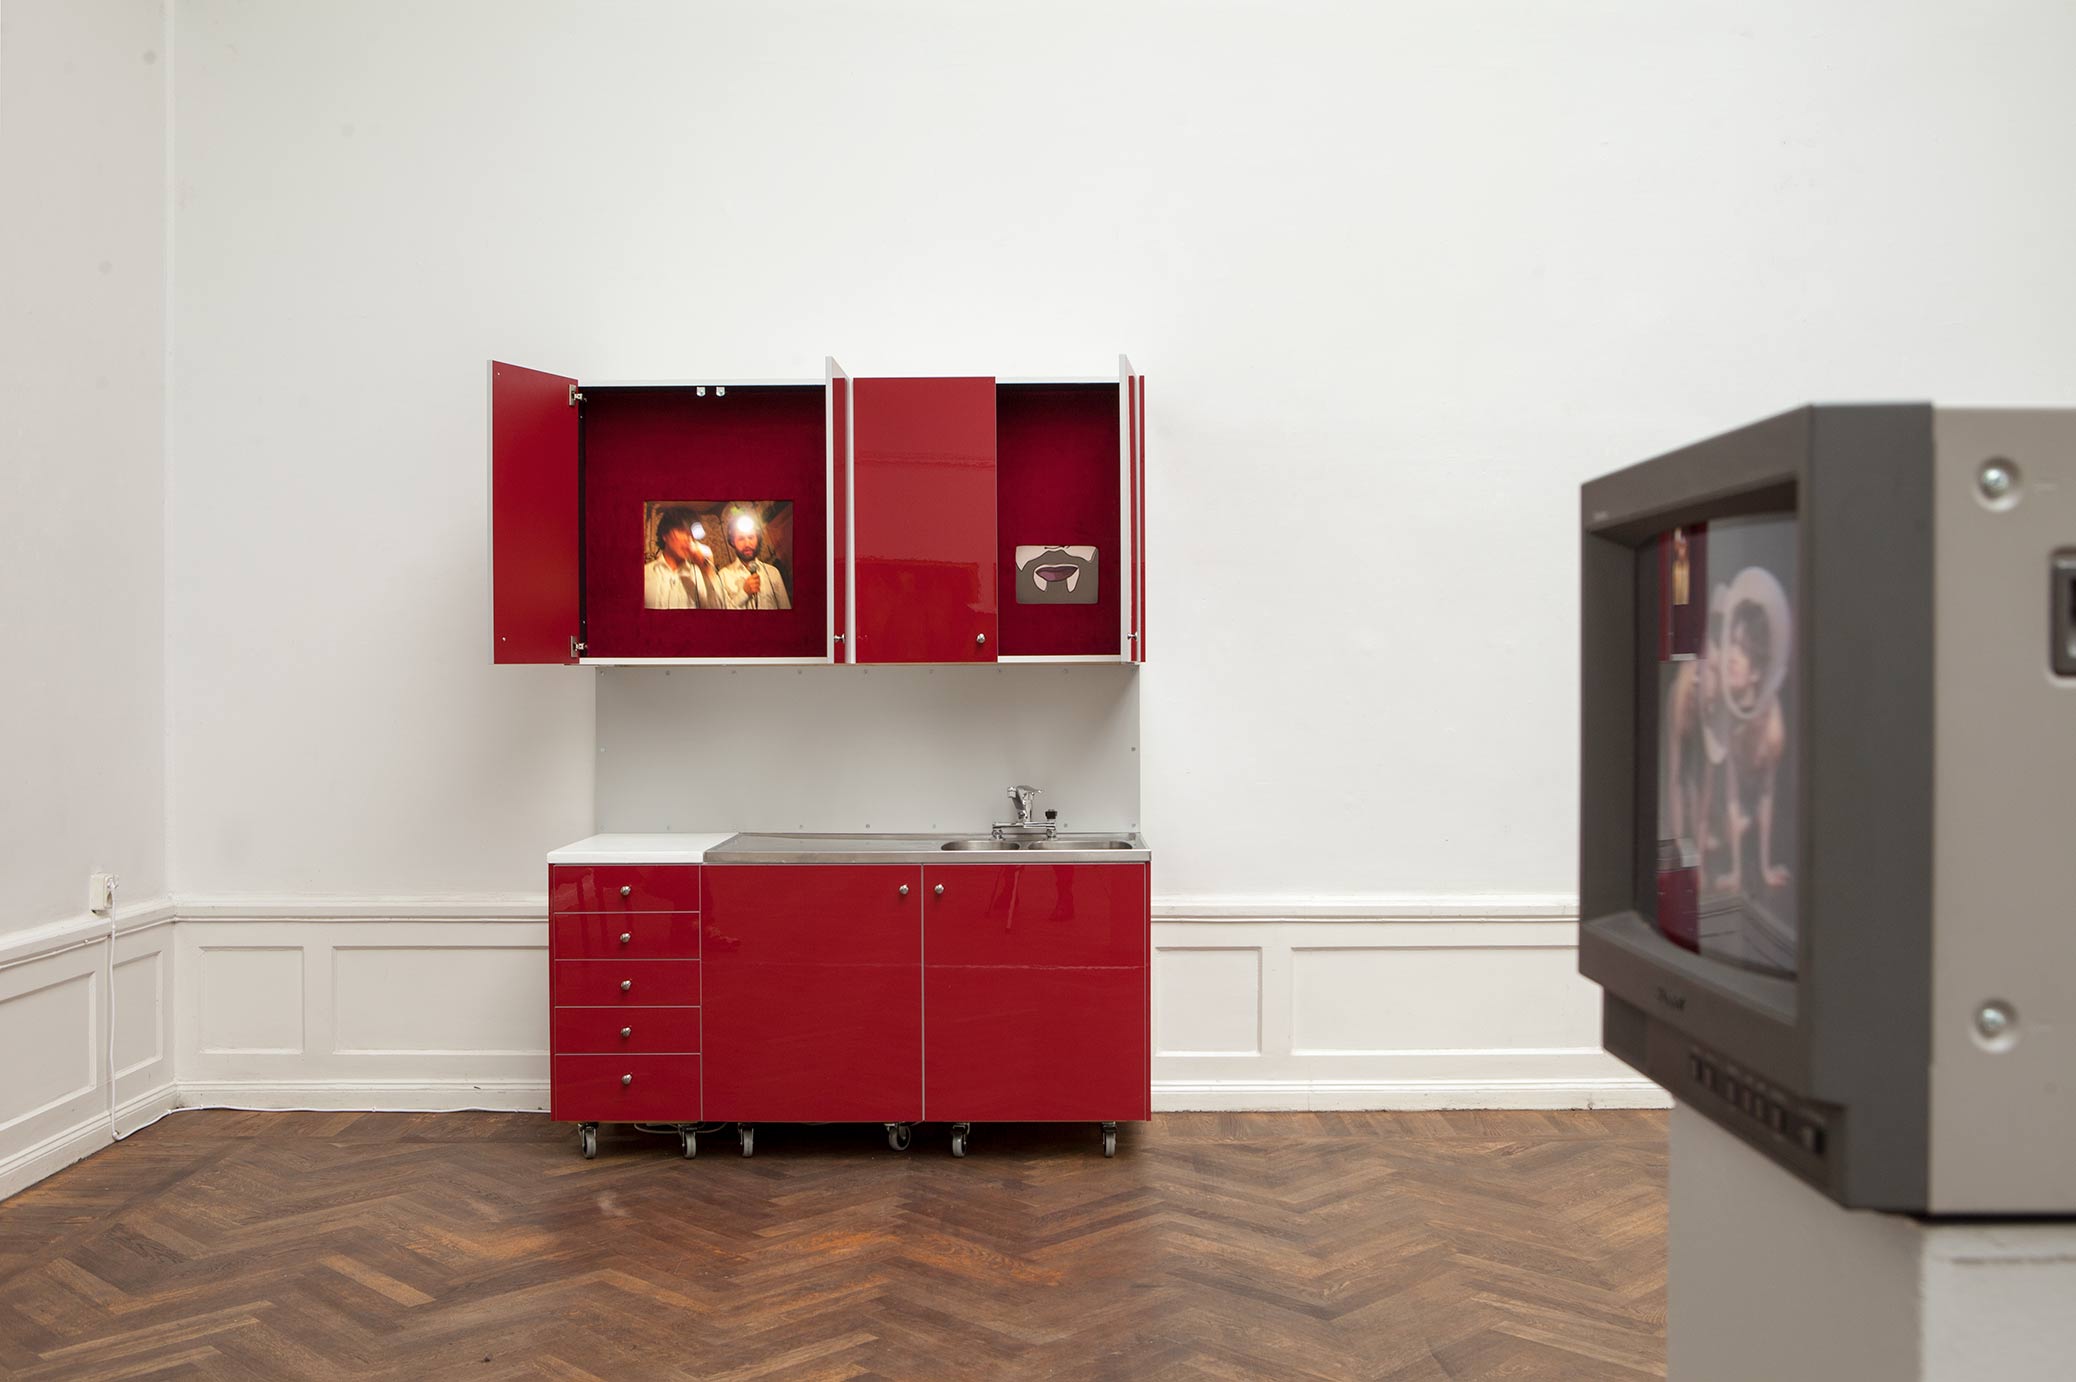 Cuisine Bizarre – The Kitchen, installation at Konstnärshuset, kitchen with hidden video monitors.